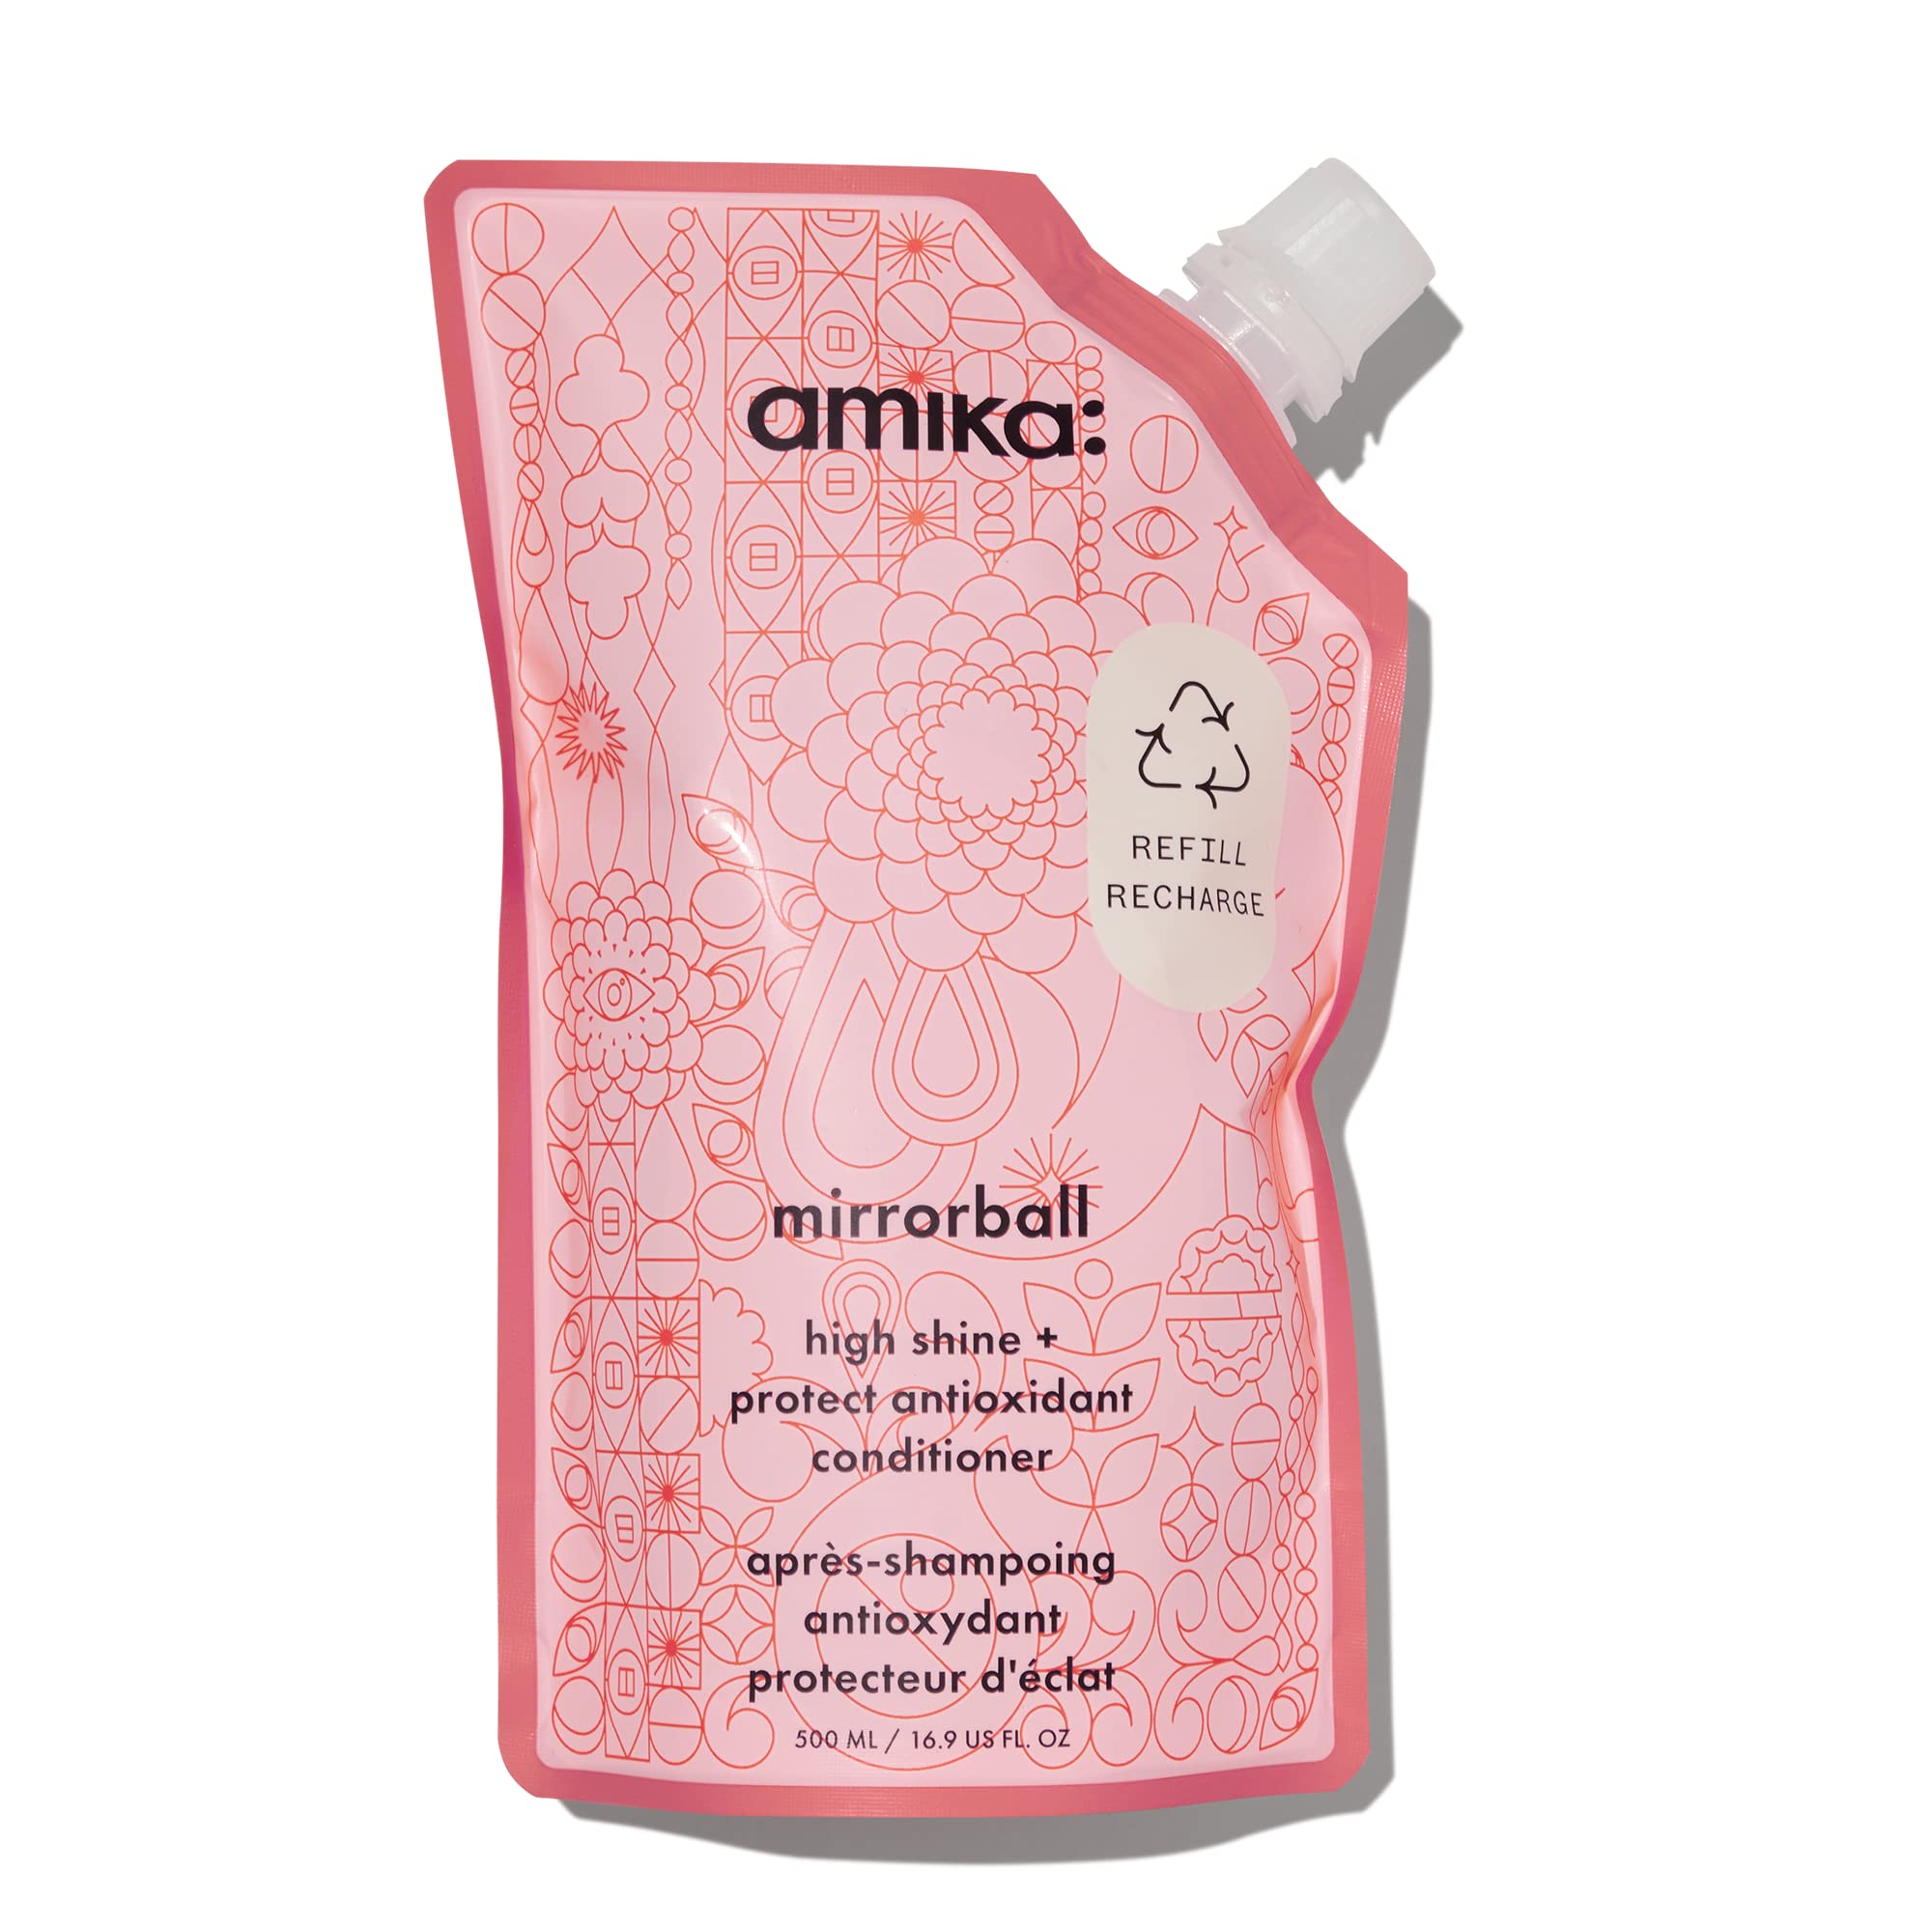 amika mirrorball high shine + protect antioxidant conditioner